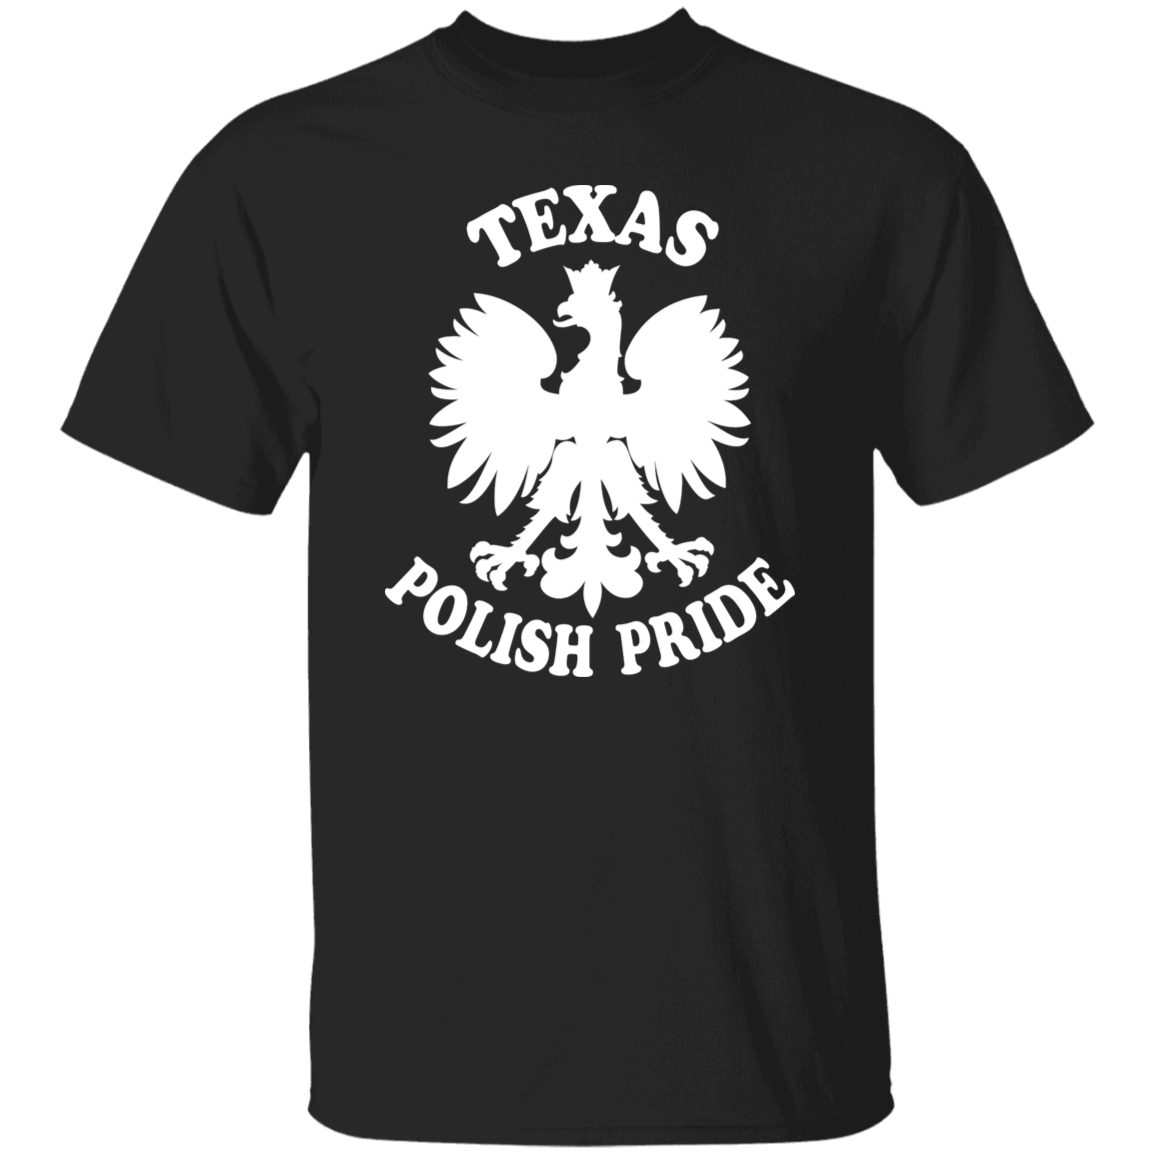 Texas  Polish Pride Apparel CustomCat G500 5.3 oz. T-Shirt Black S